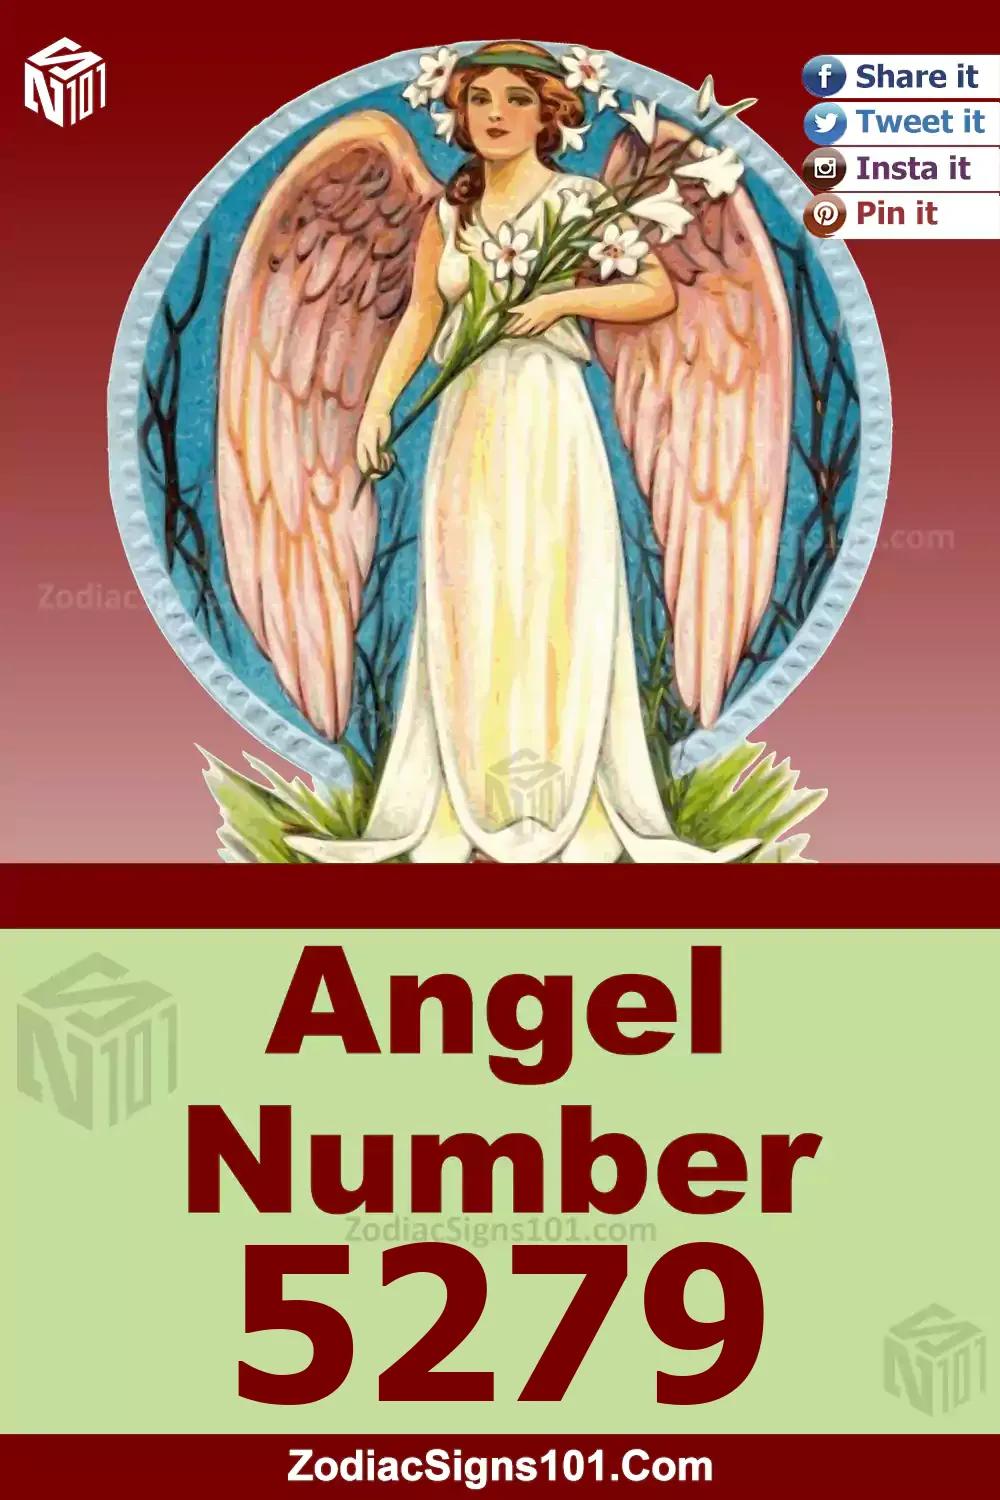 5279-Angel-Number-Meaning.jpg